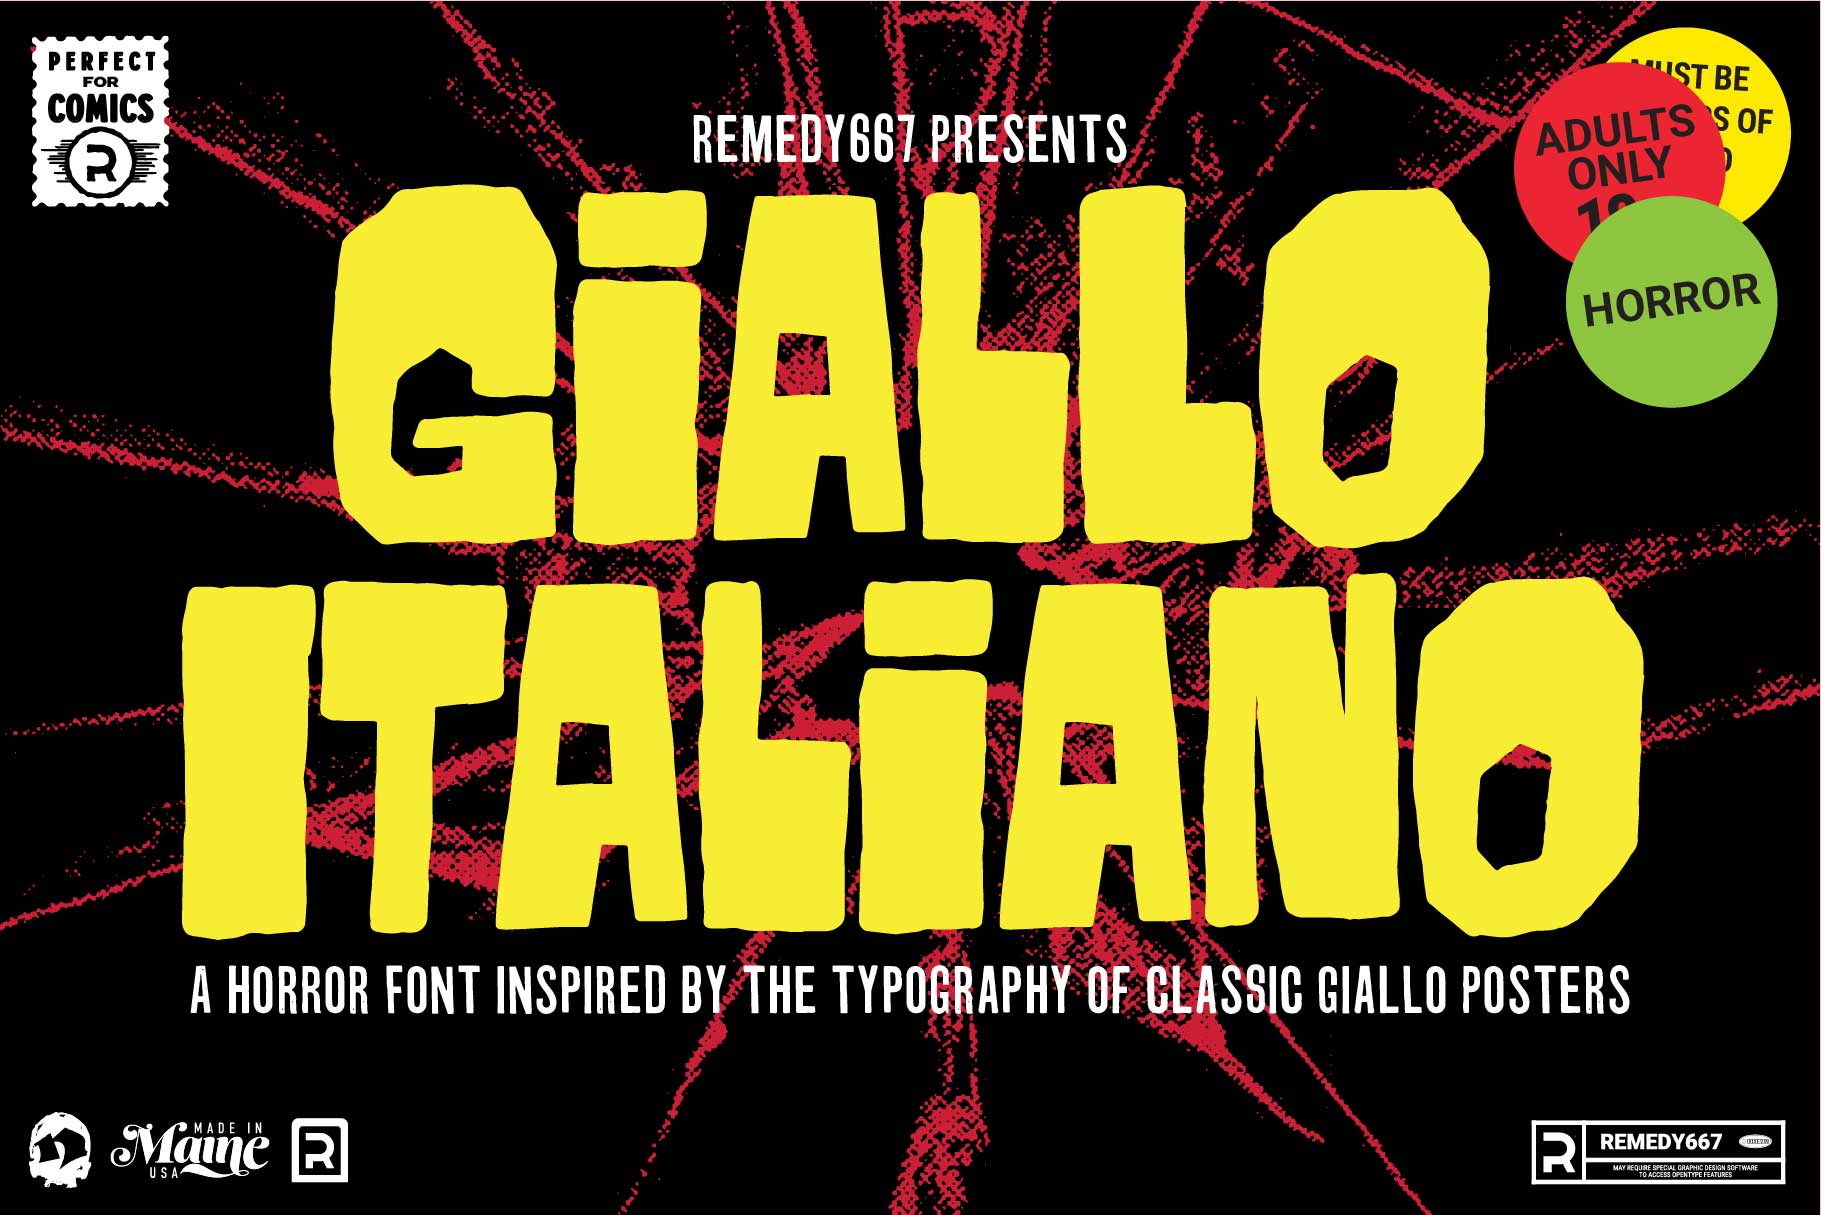 Giallo style horror font | RetroSupply Co.